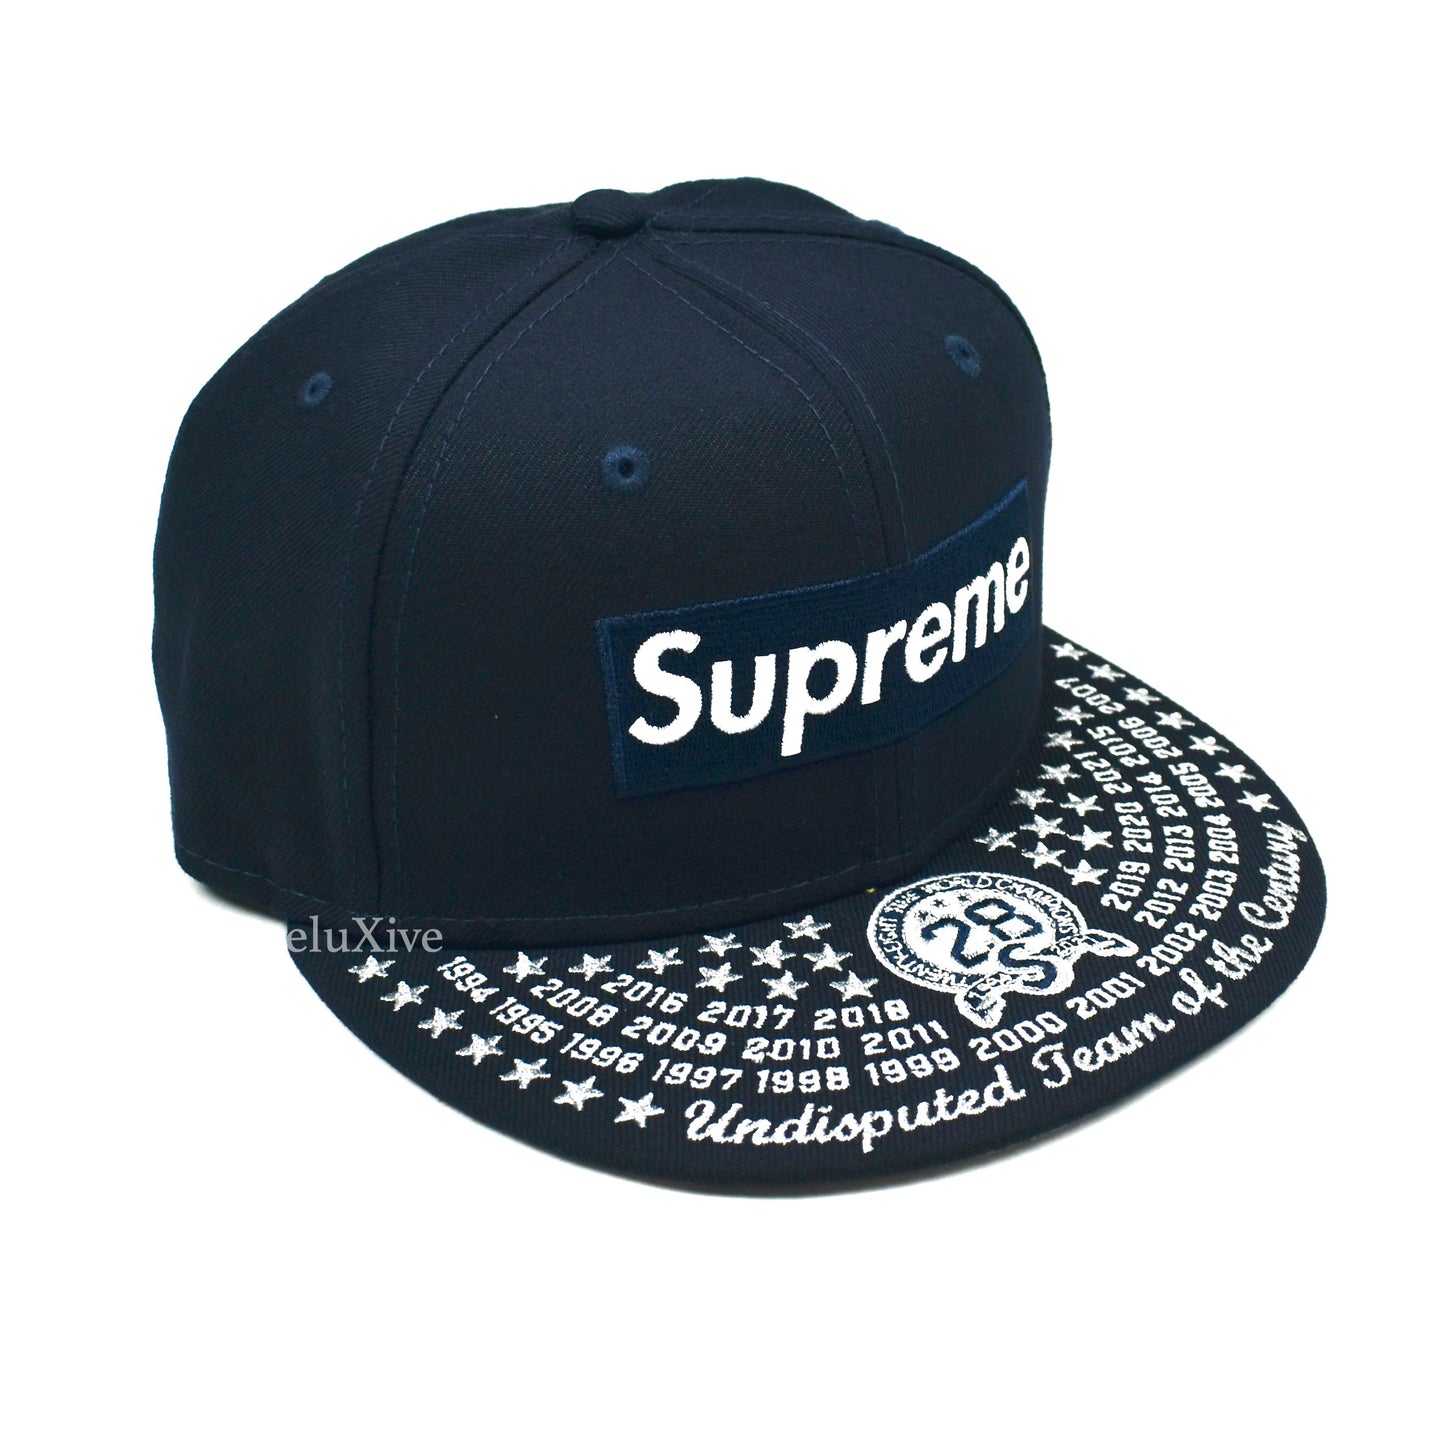 Supreme Champions Box Logo 7 1/4 59Fifty New Era Hat Fitted Cap